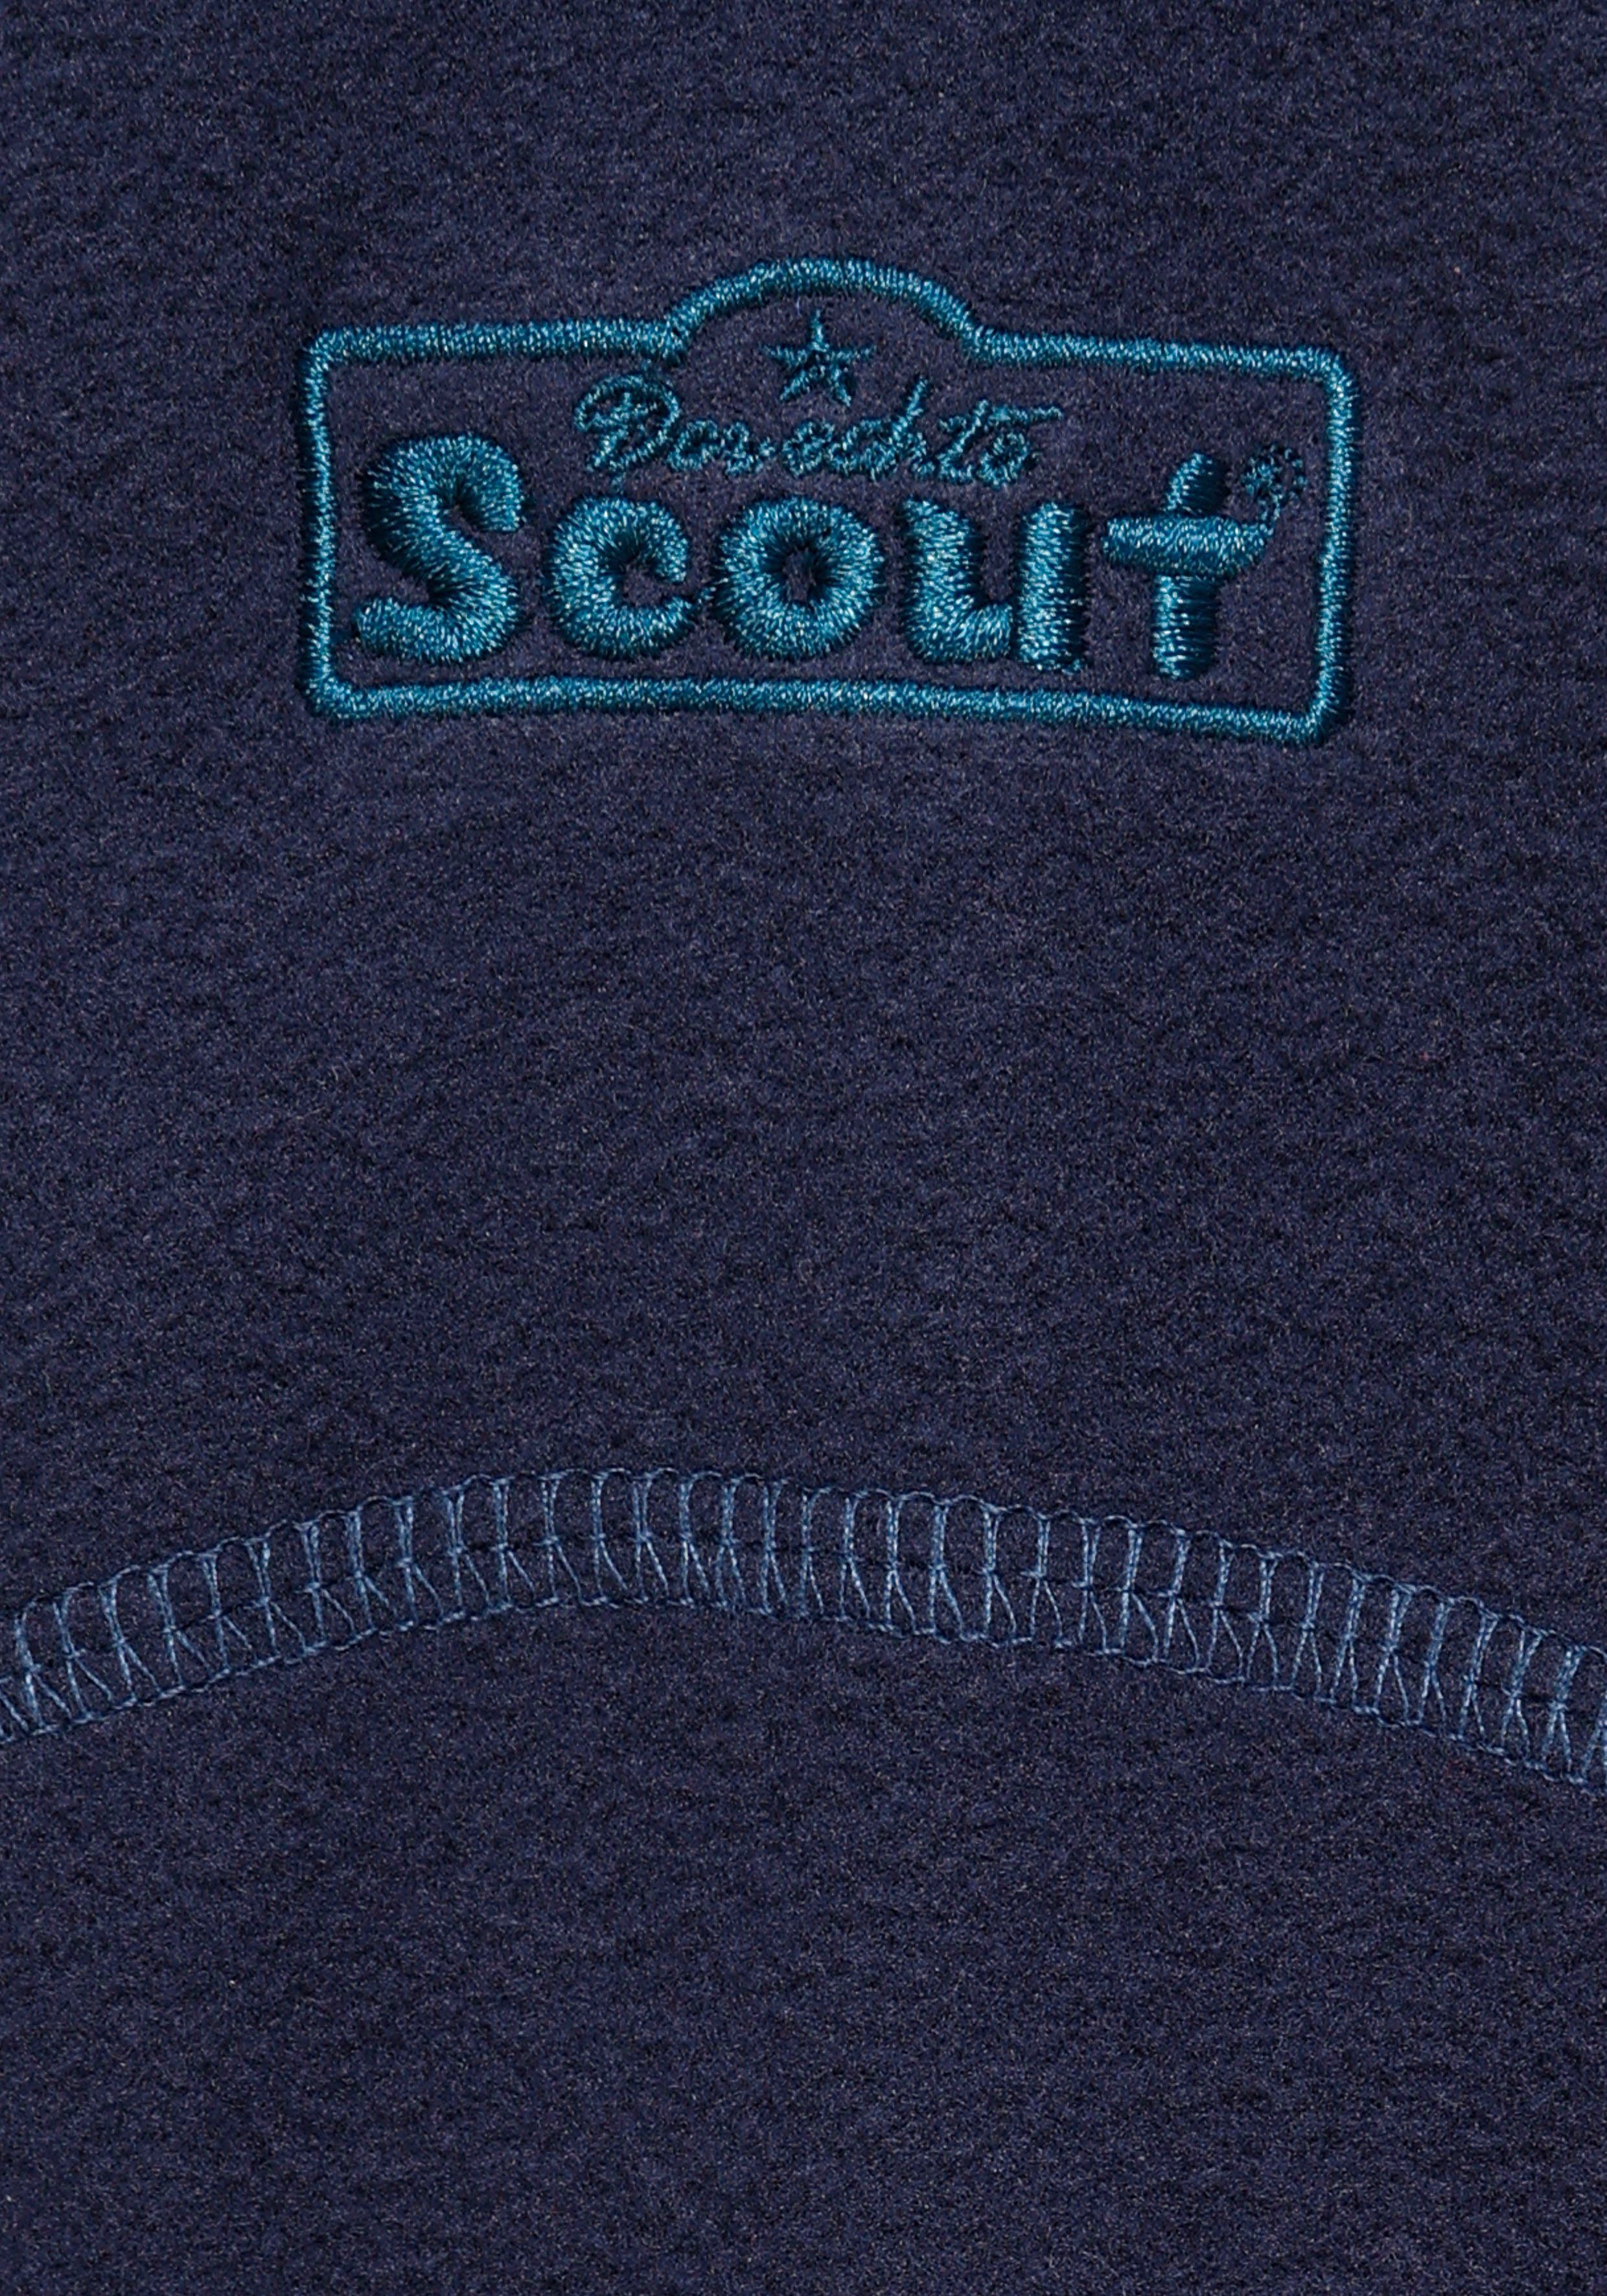 Scout Fleecejacke COZY aus leichtem, Microfleece wärmendem marine